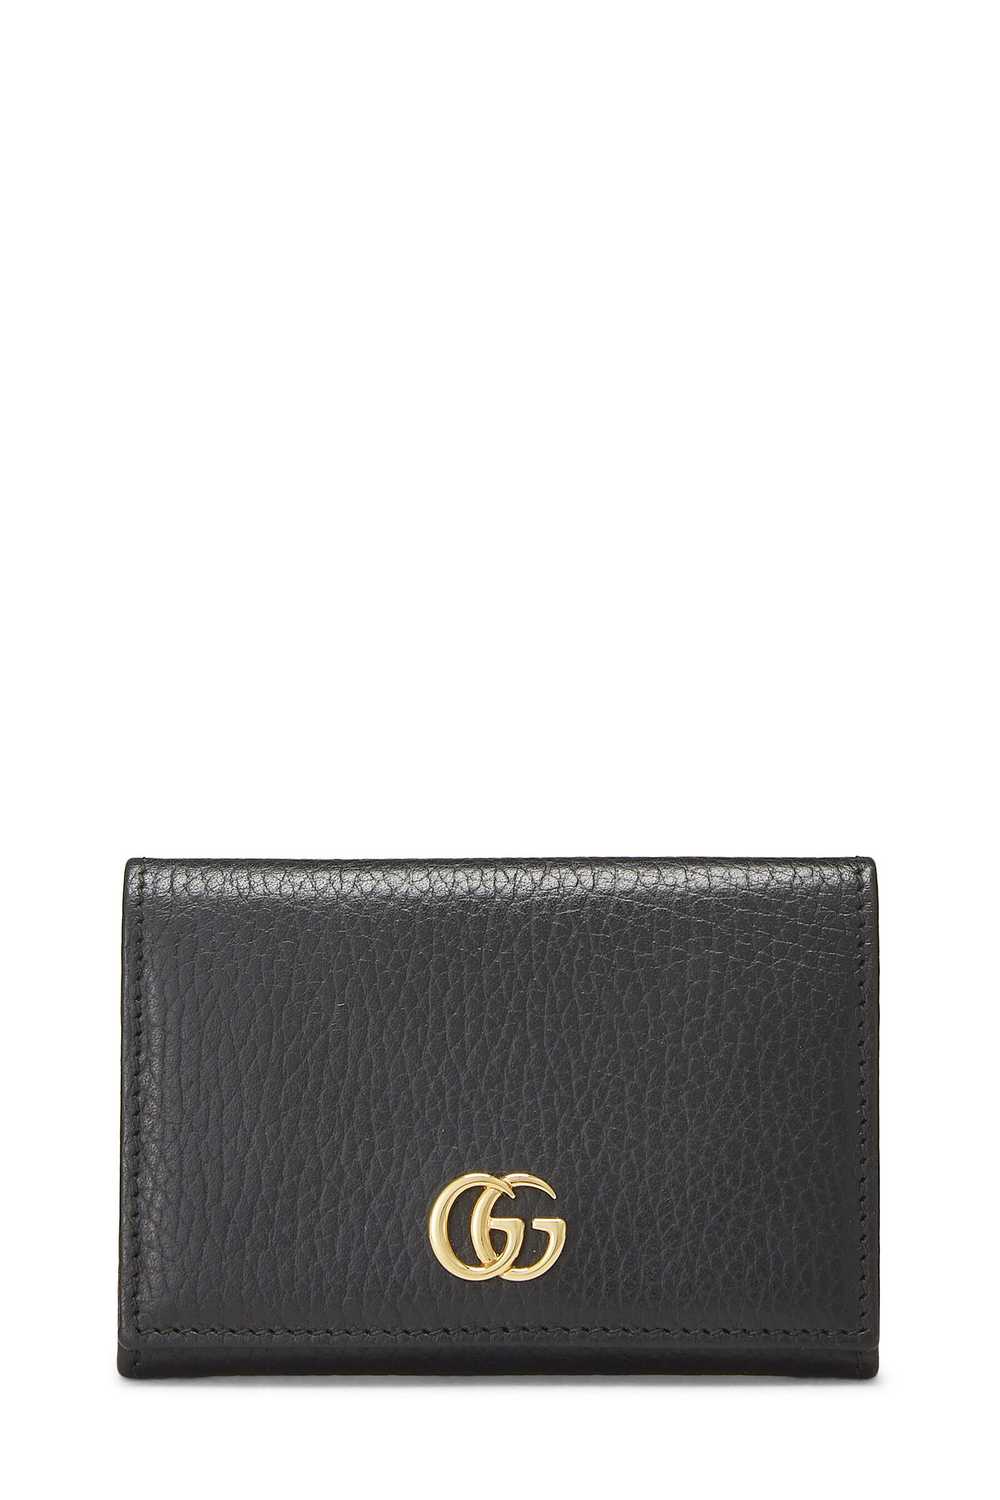 Black Leather GG Marmont Card Holder - image 1